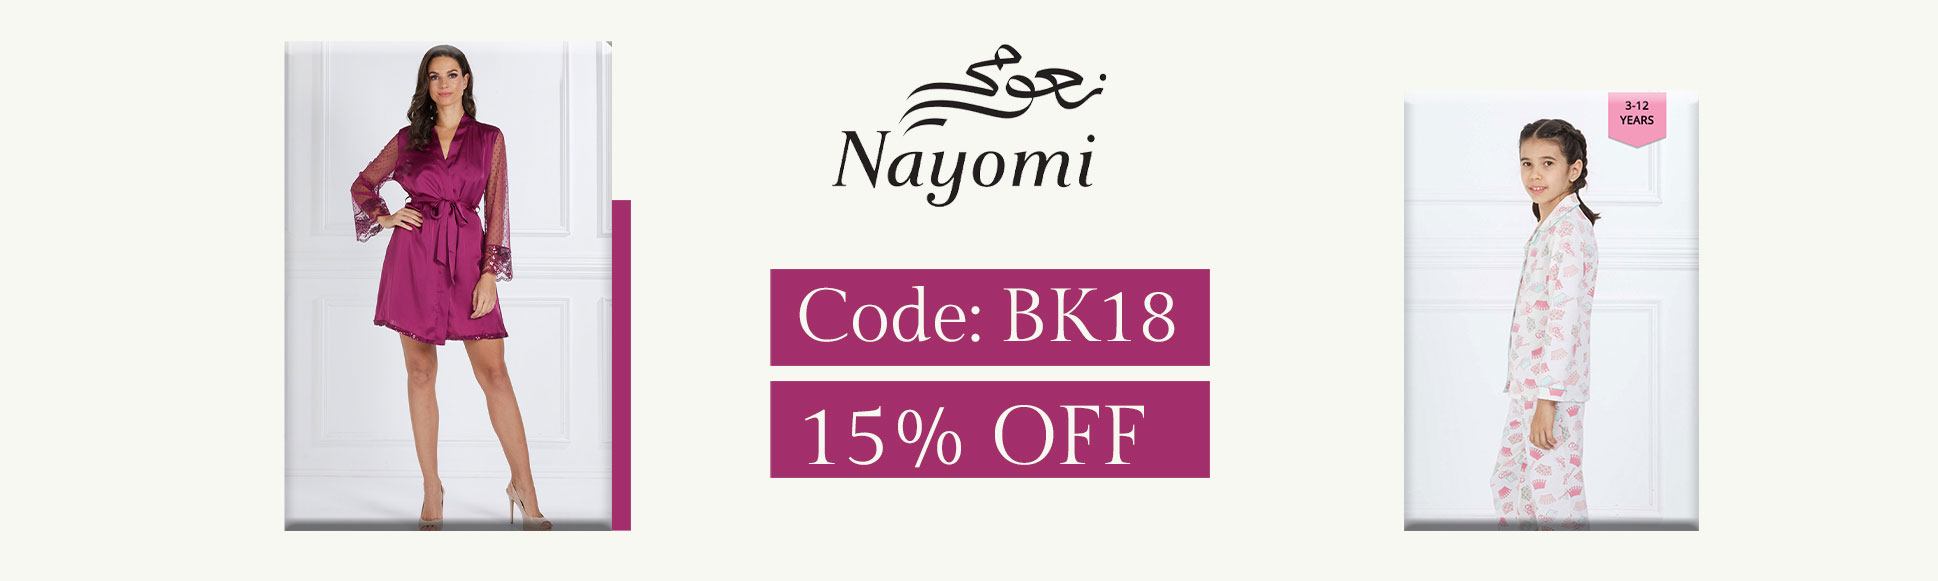 nayomi kuwait coupon code